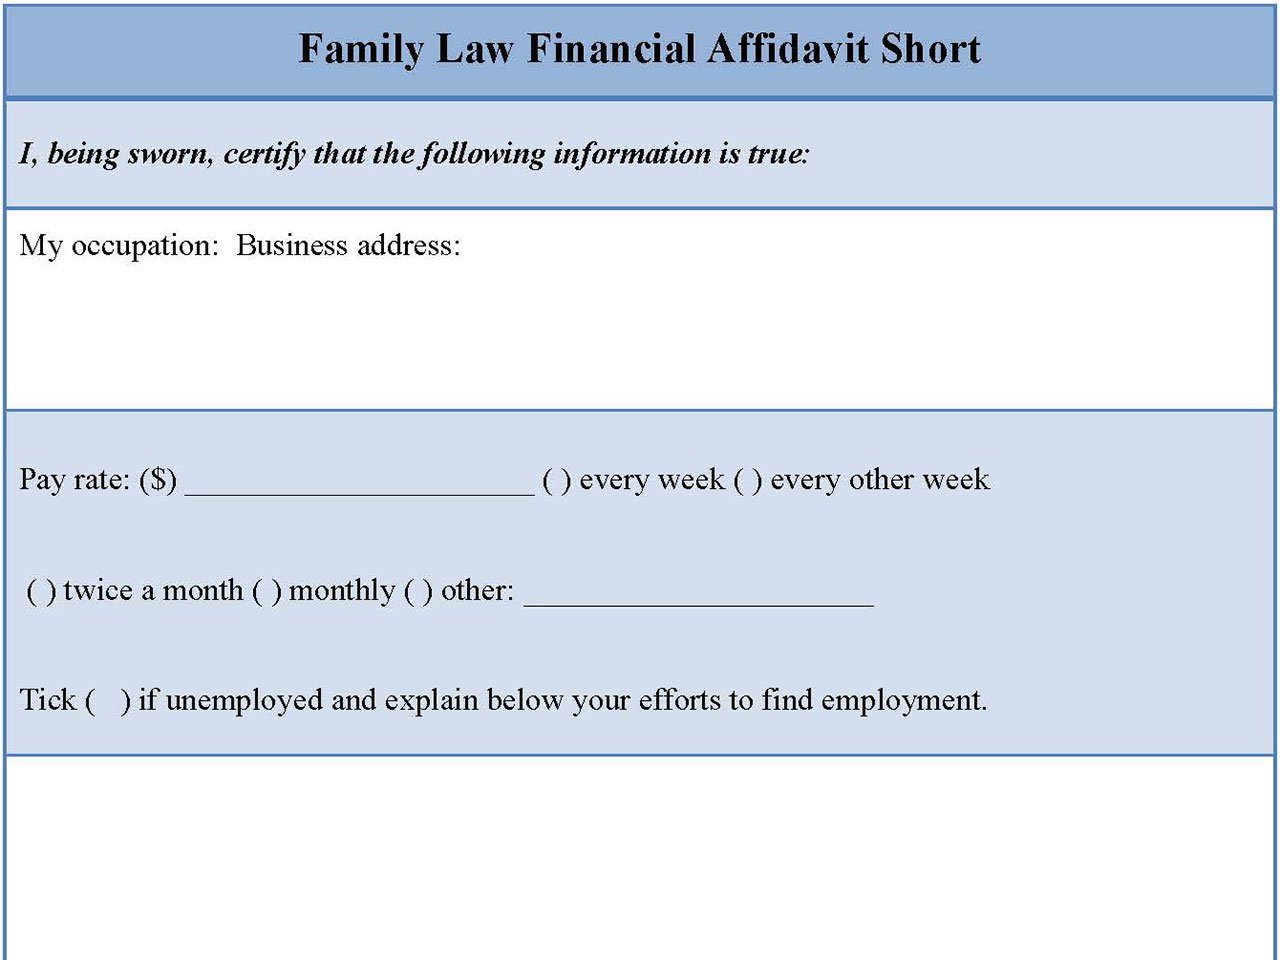 Family Law Financial Affidavit Short Form